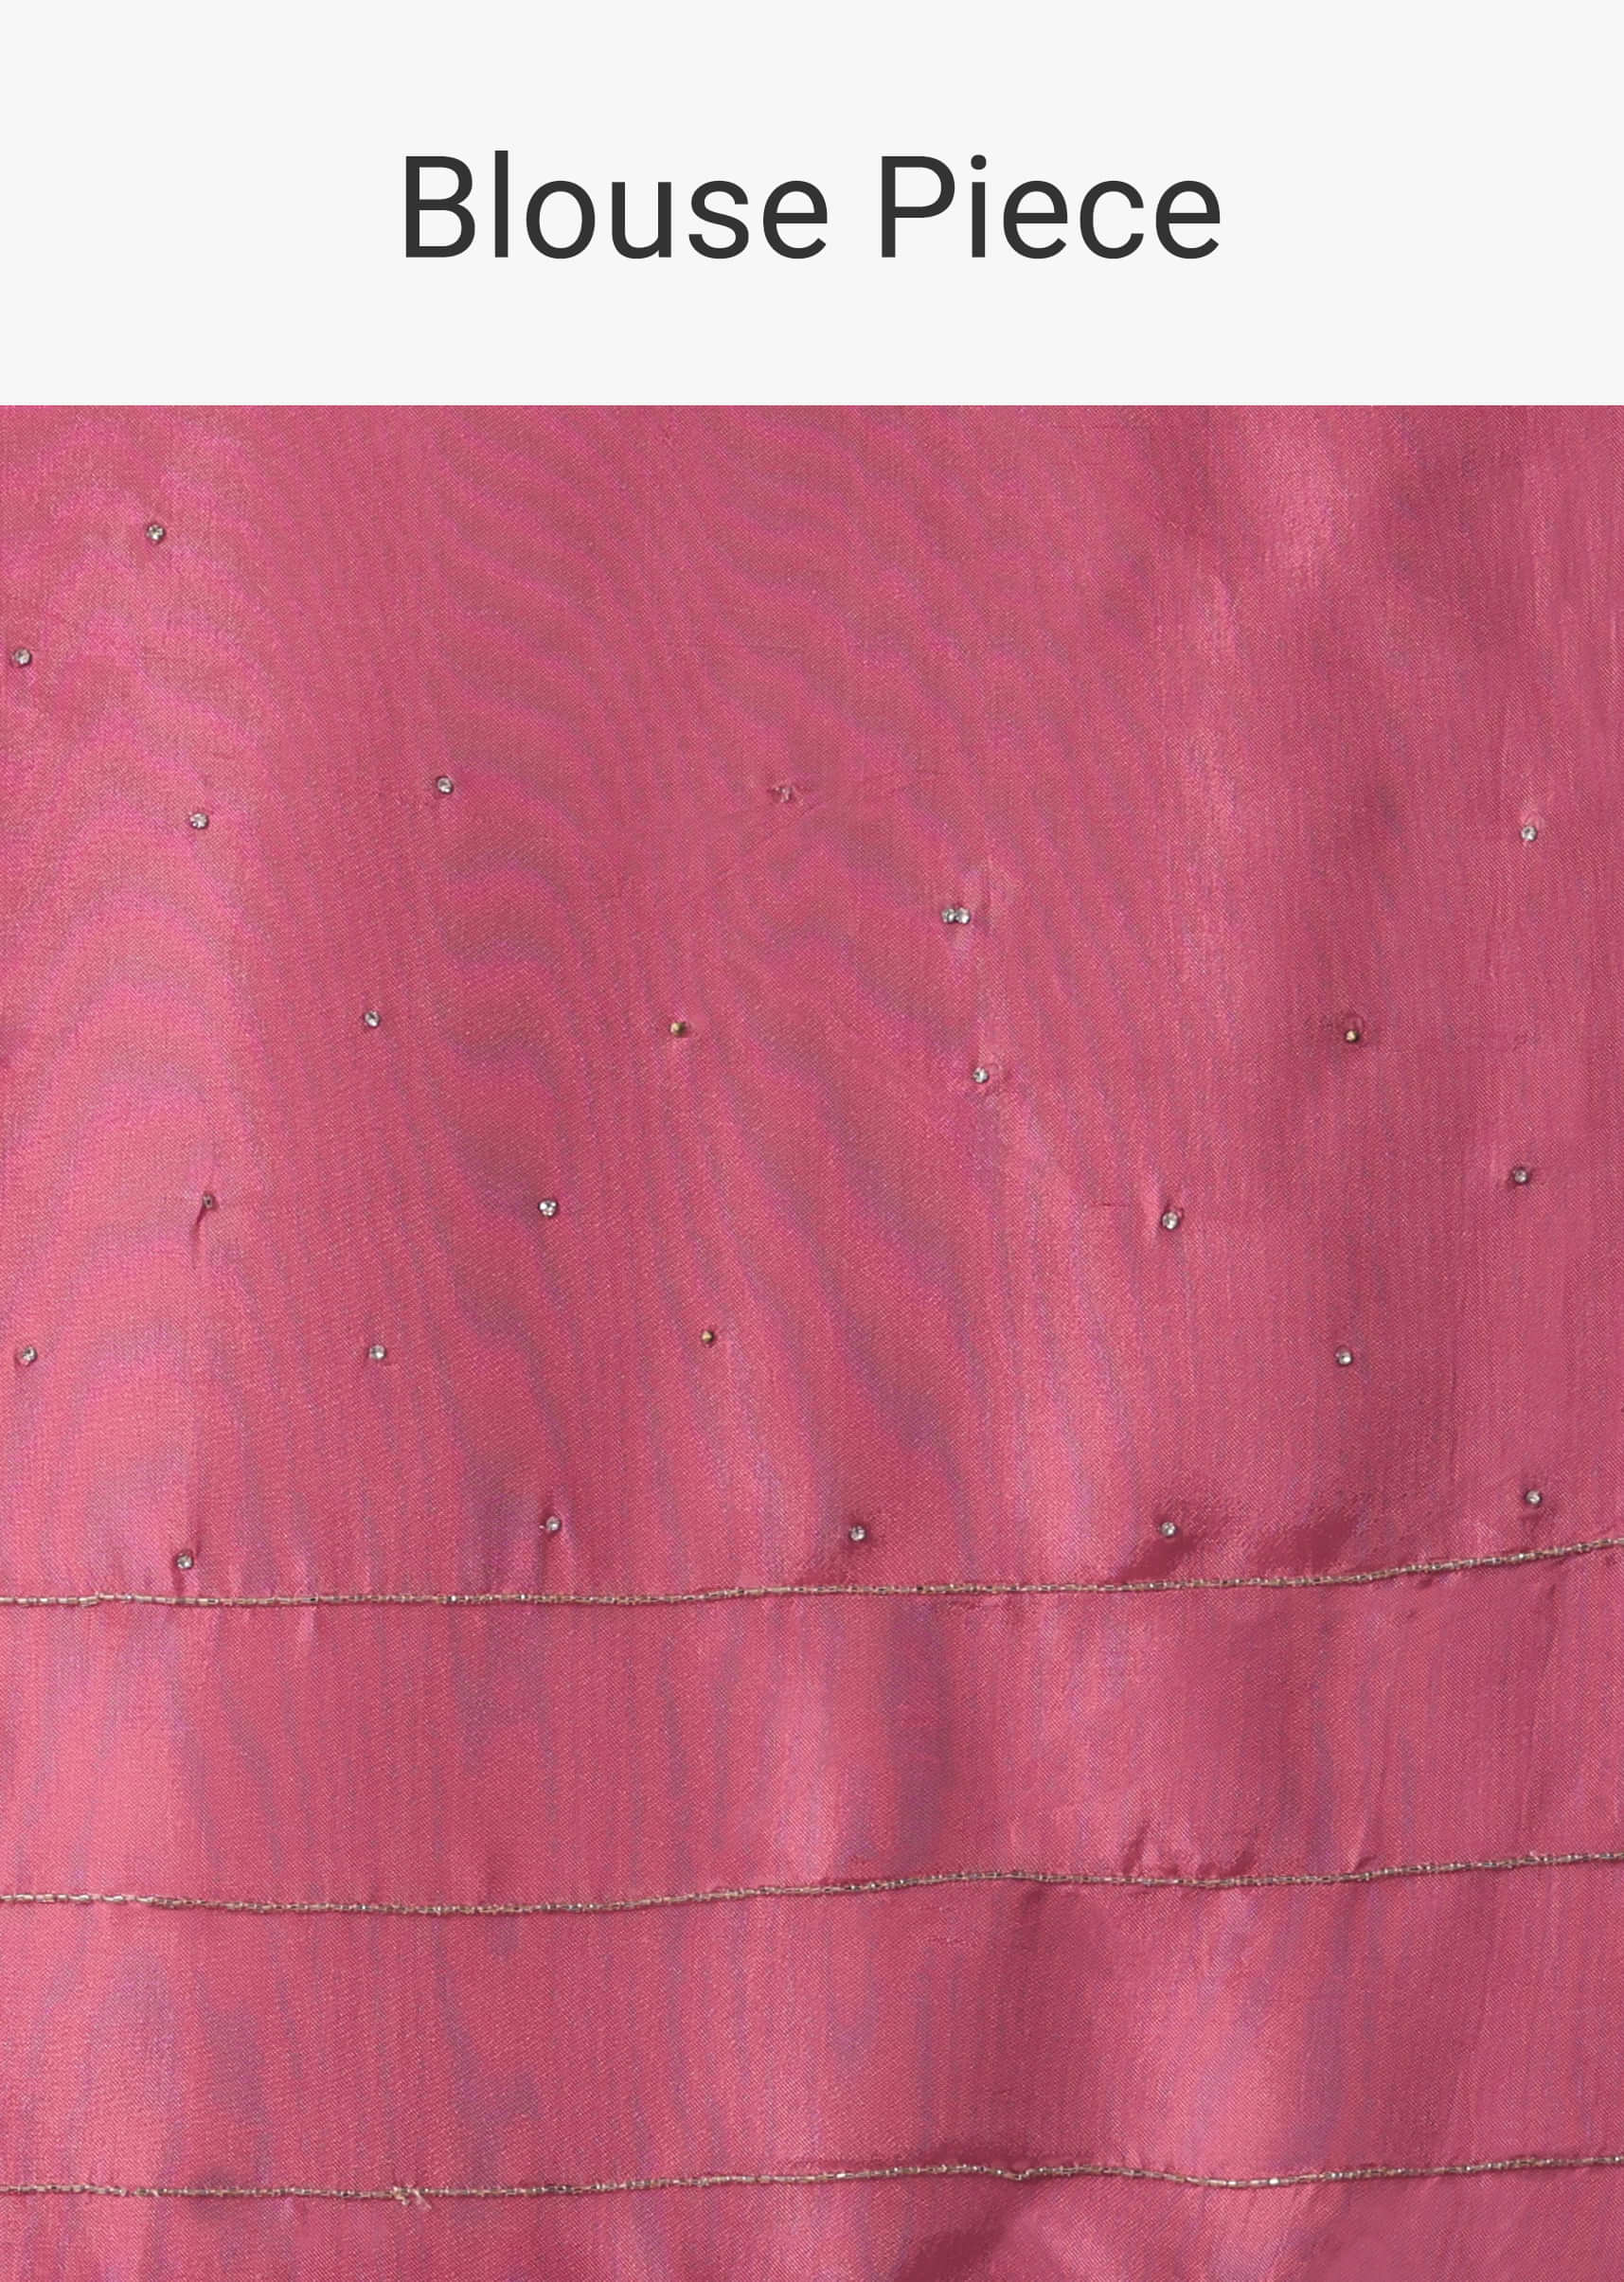 Pink Festive Shibori Dyed Saree In Dola Silk